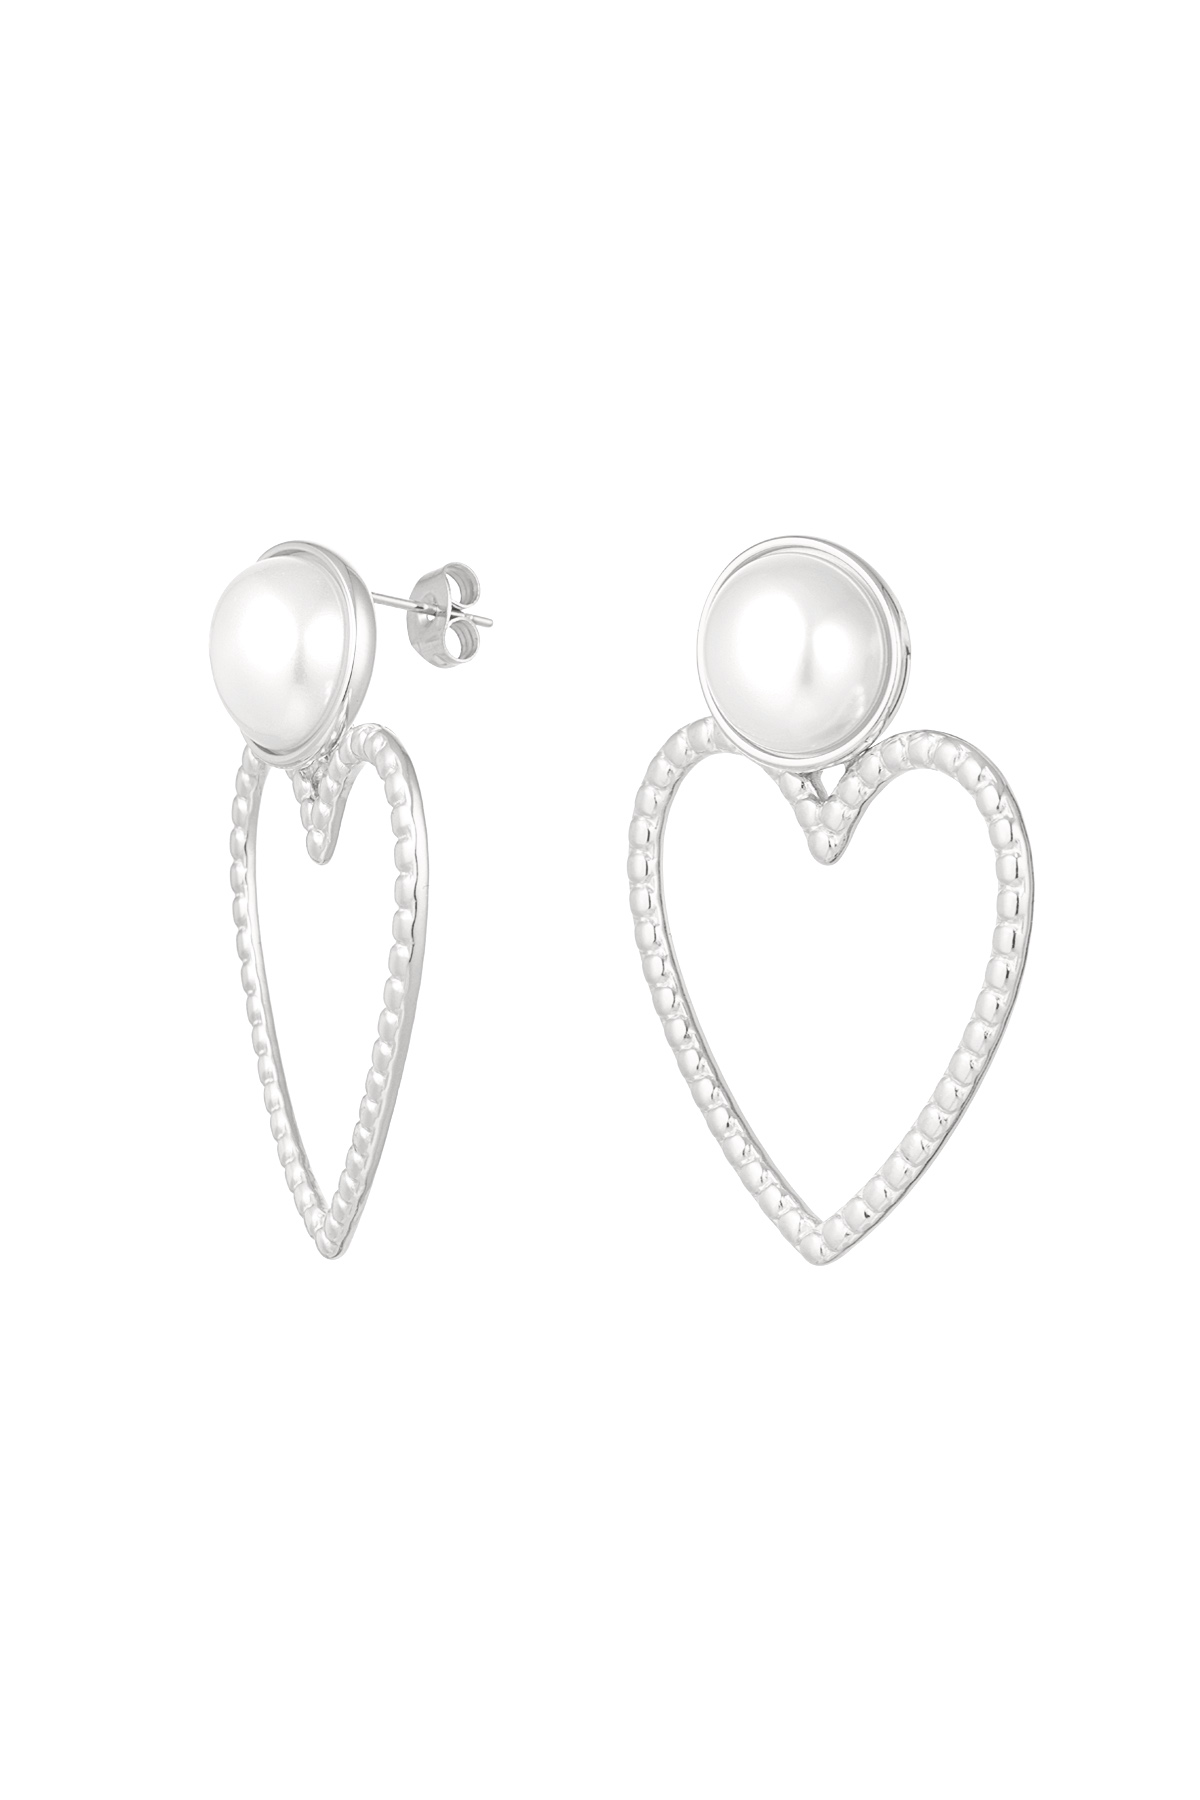 Earrings heart with pearl - silver